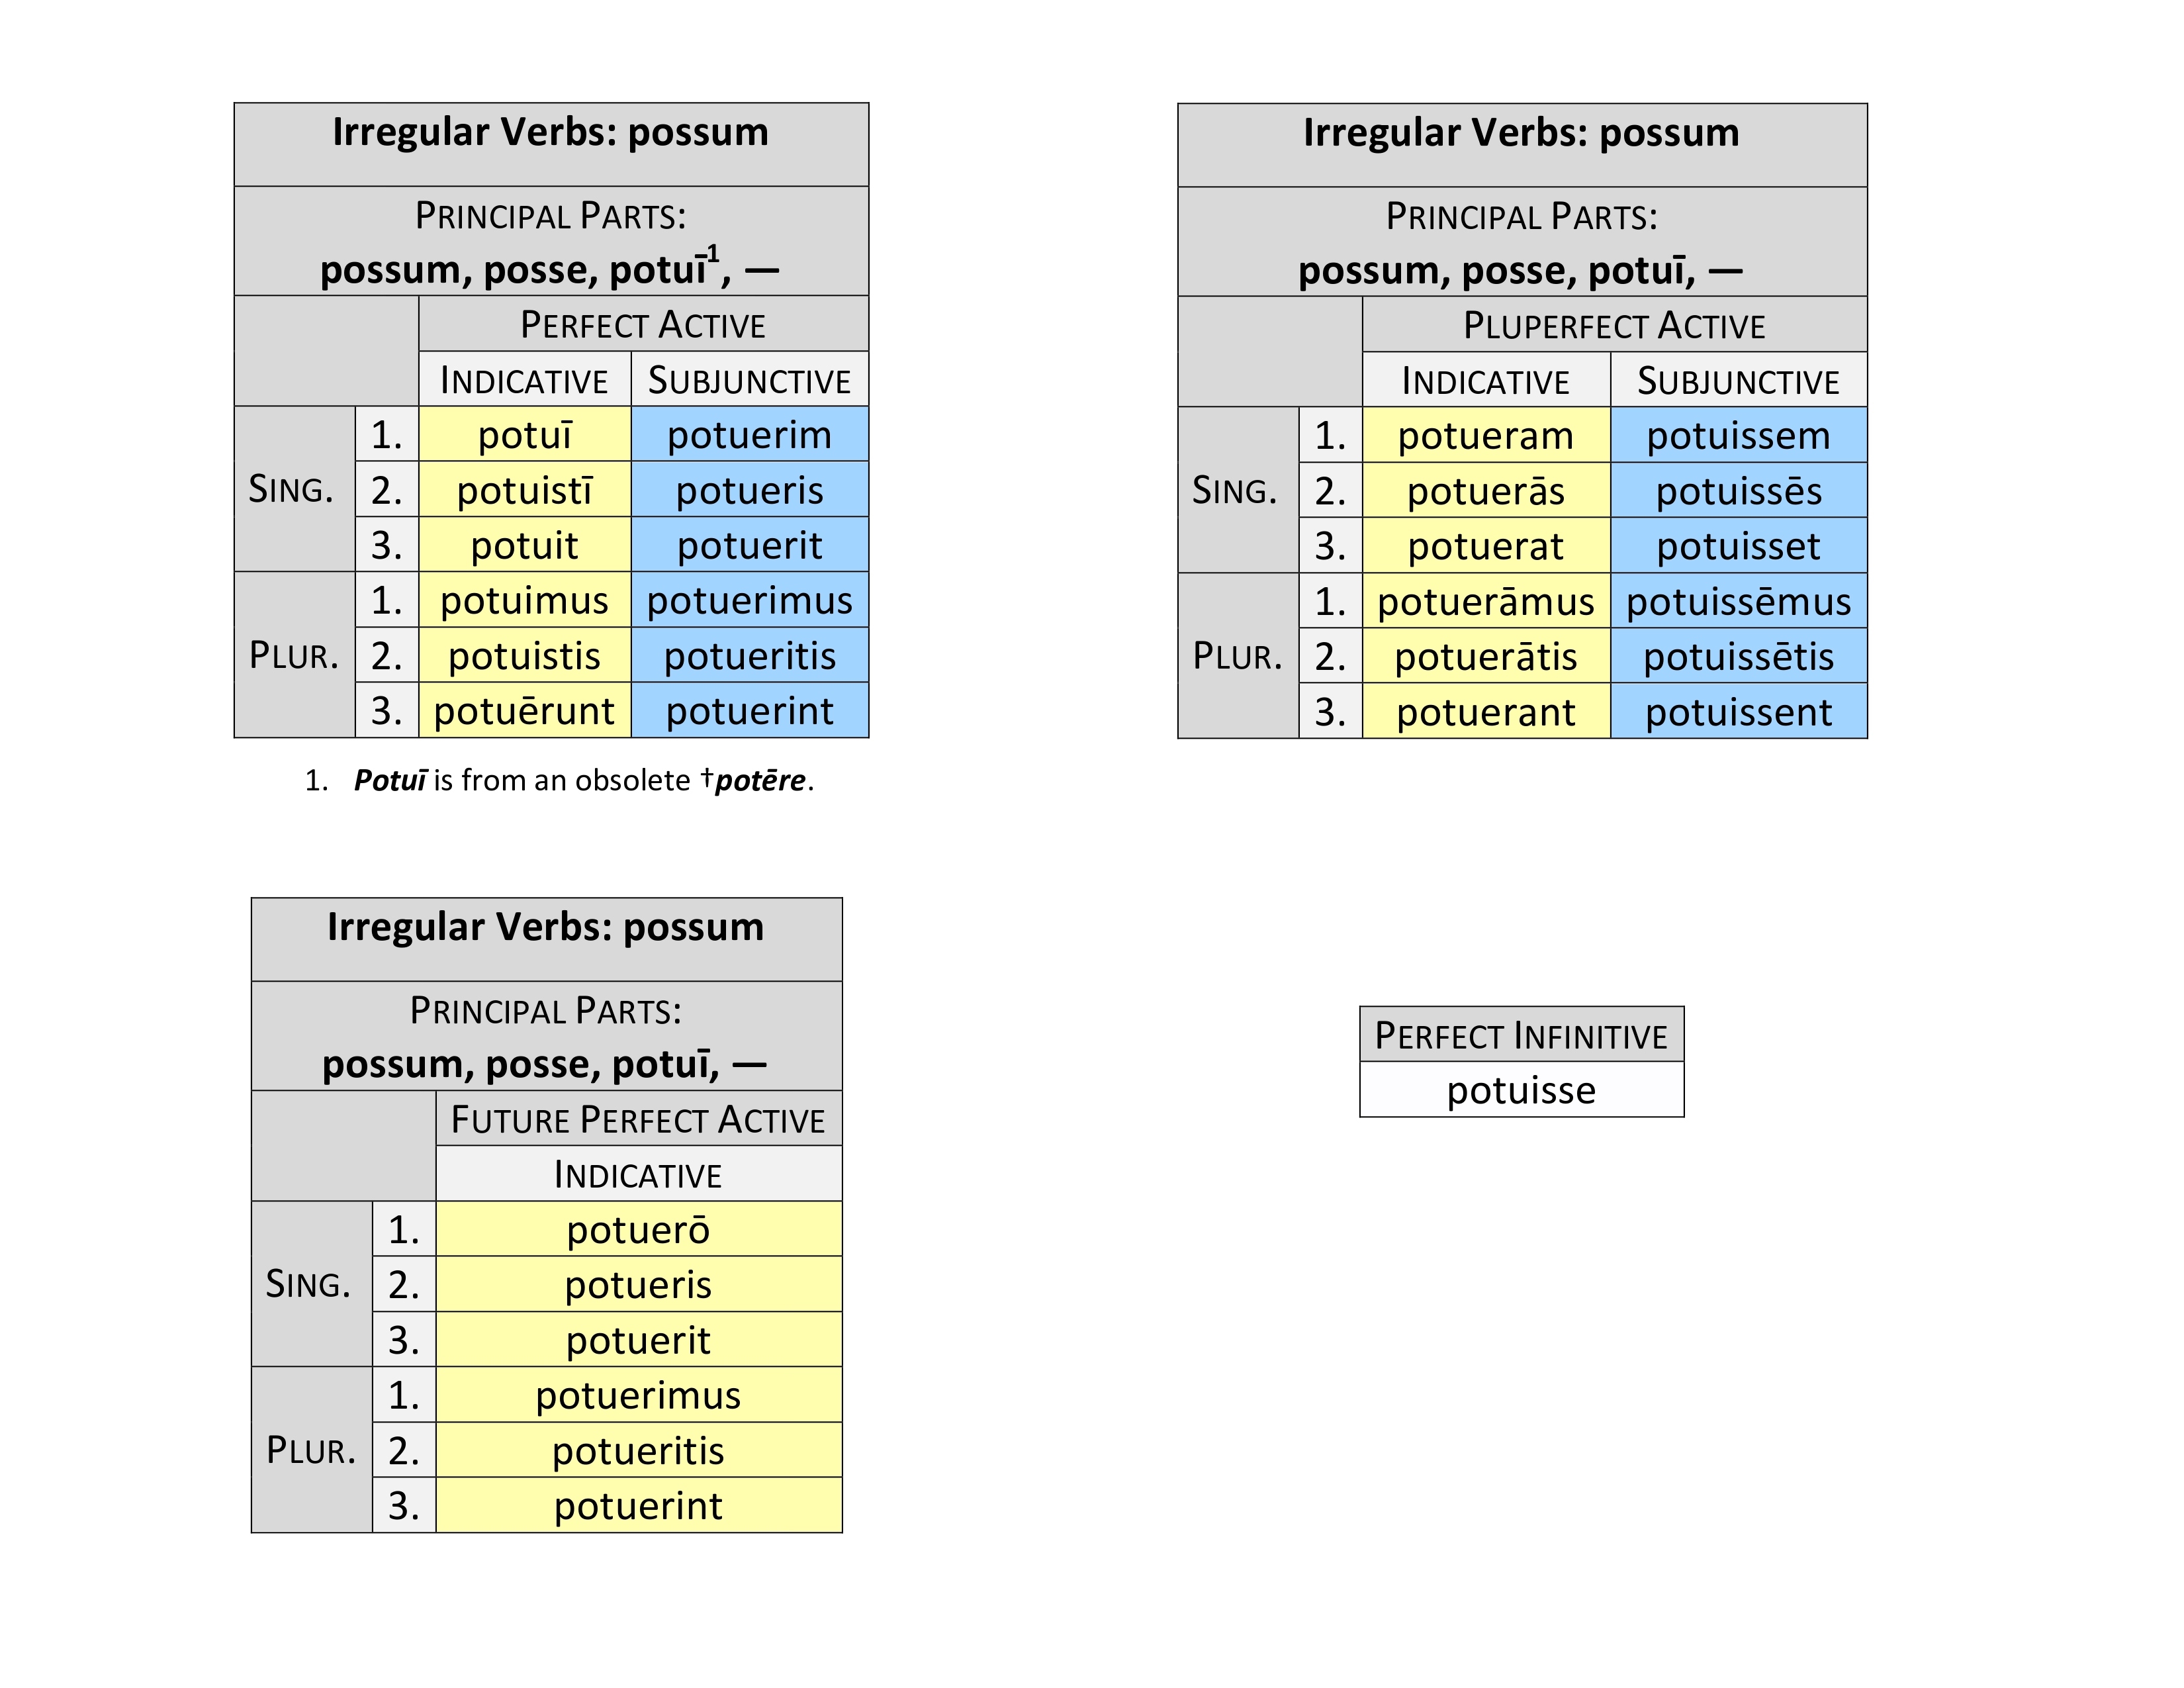 irregular verb possum perfect system synopsis